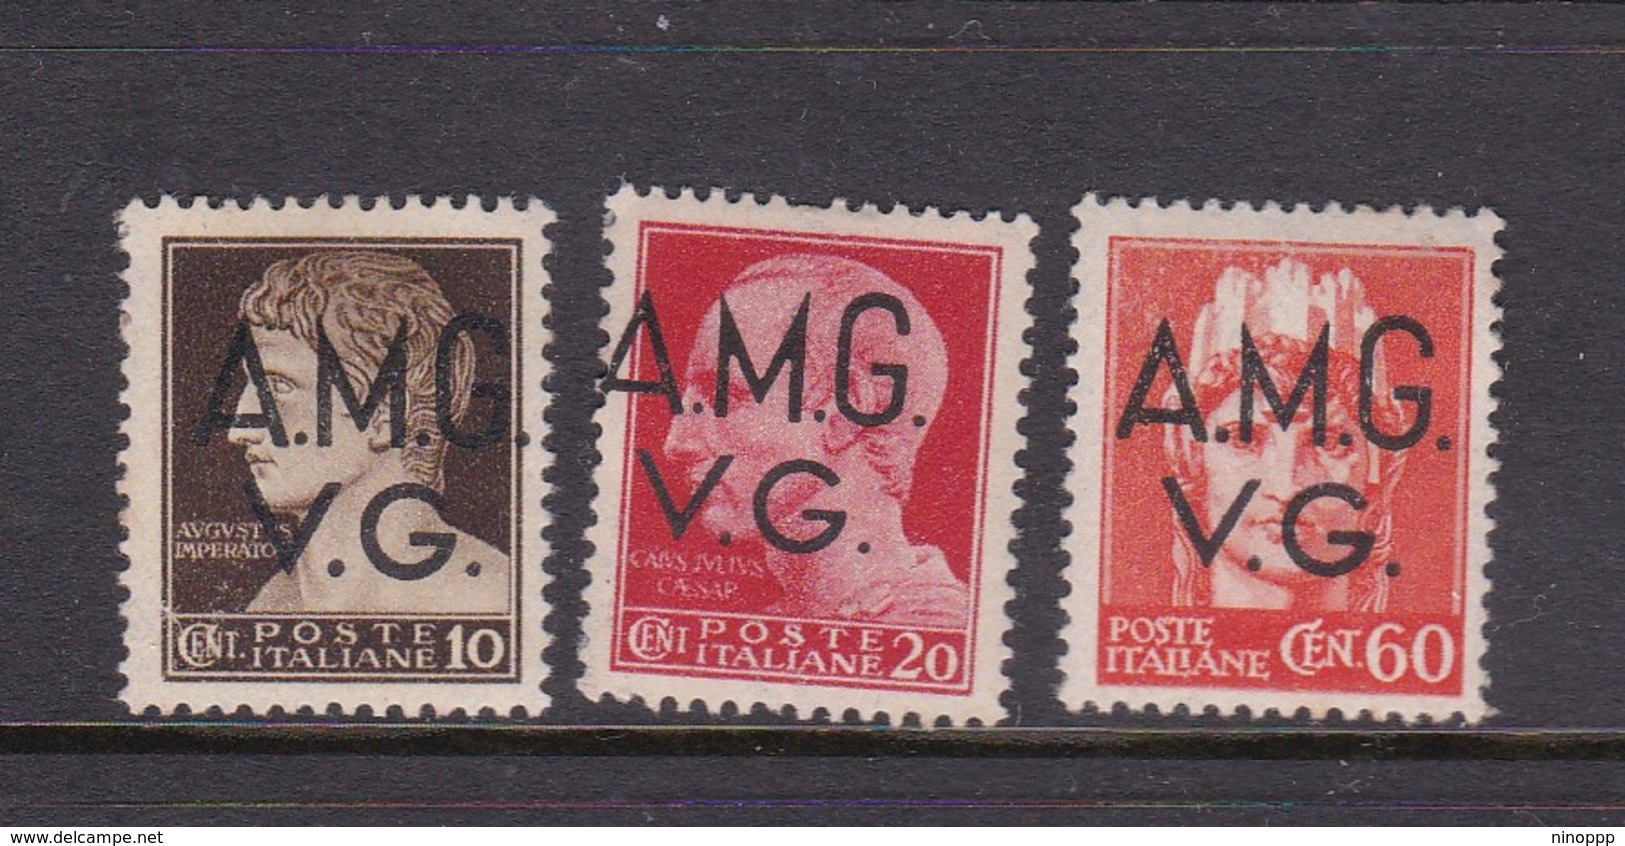 Venezia Giulia And Istria  A.M.G.V.G. 1945 S 8-10 1945 Definitives  Mint Hinged - Mint/hinged